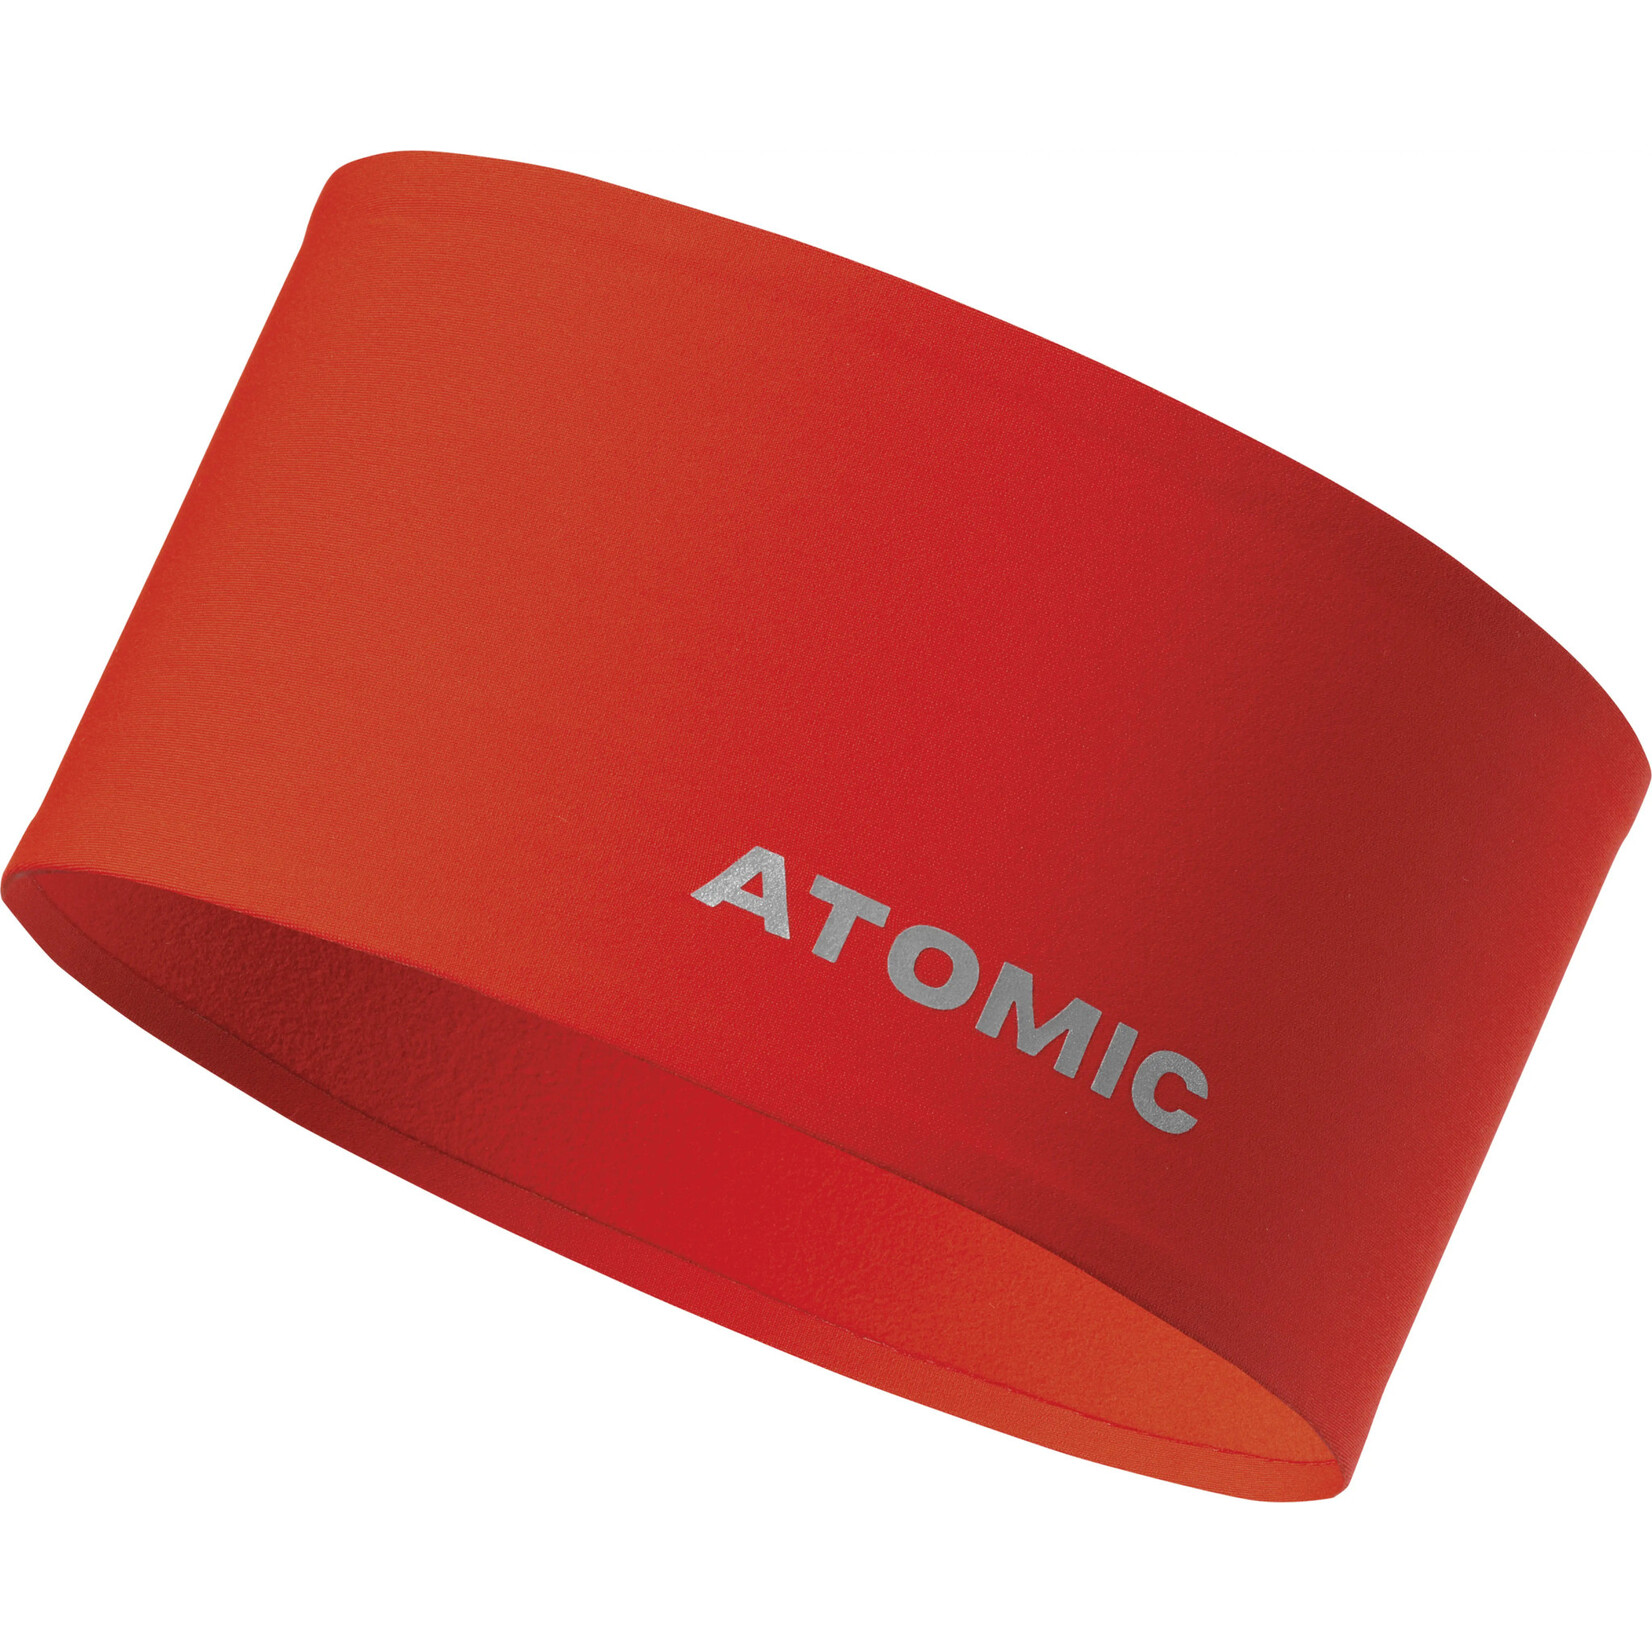 Atomic Bandeau Alps Tech Headband